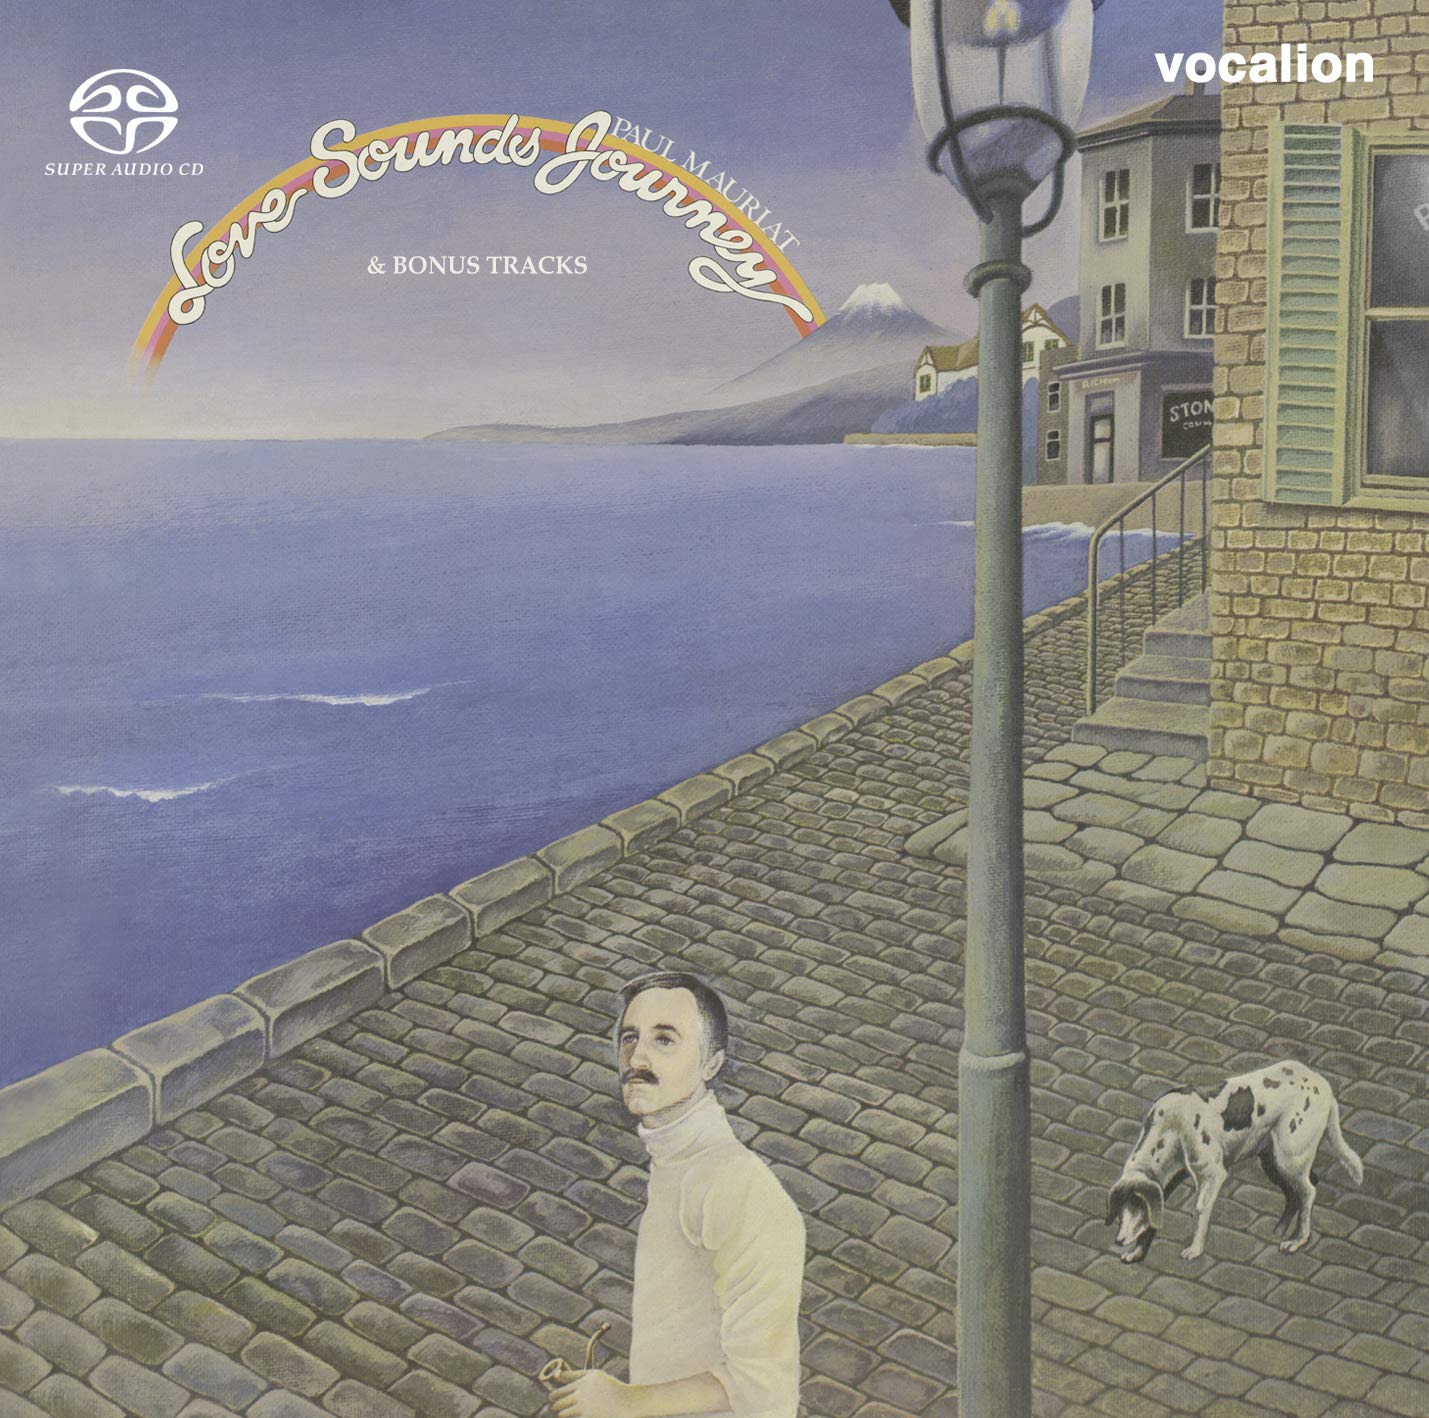 Paul Mauriat – Love Sounds Journey & bonus tracks (1976/2020) SACD ISO